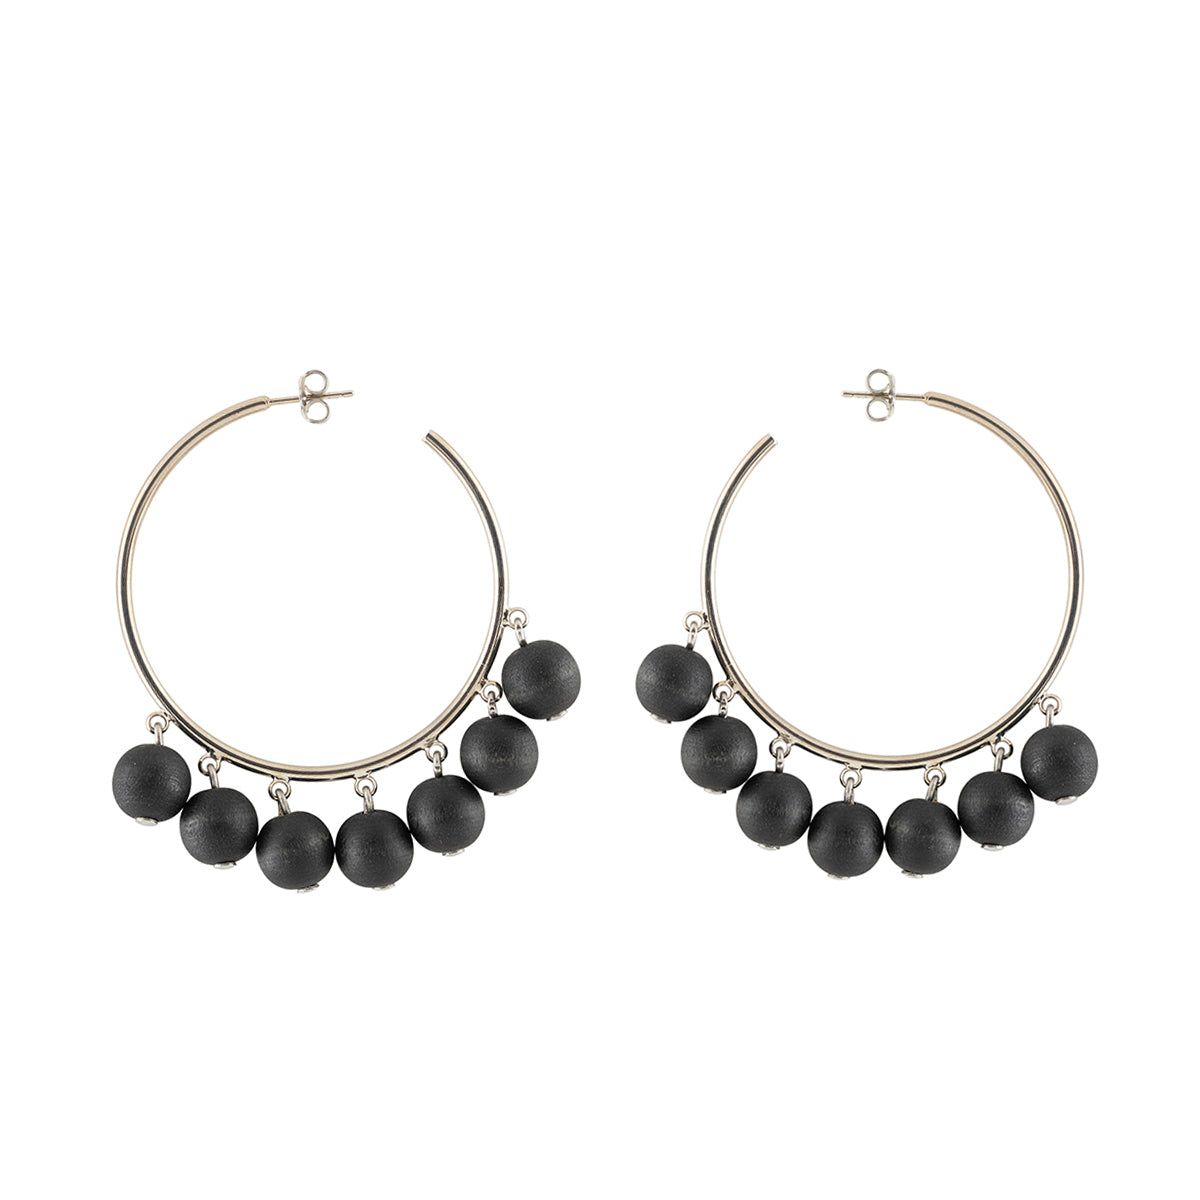 Sevilla earrings, black